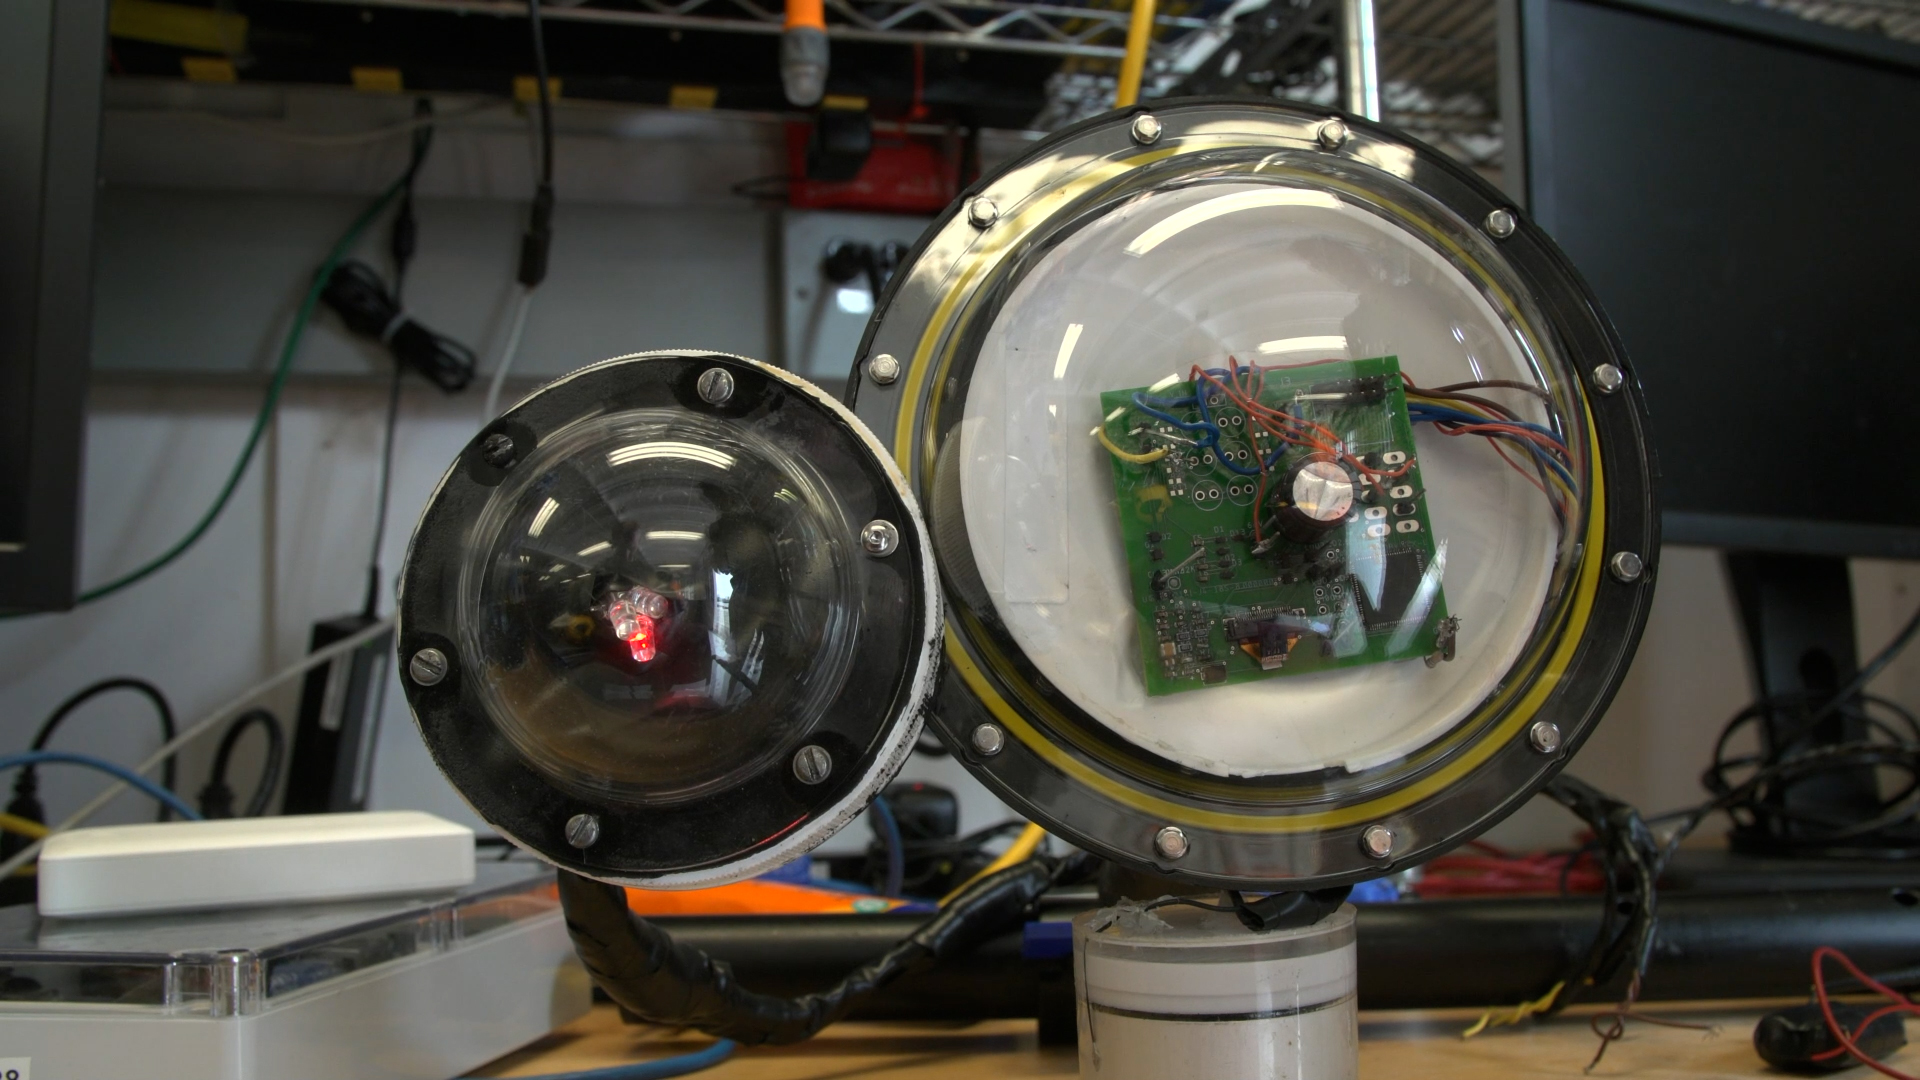 Battery-free wireless underwater camera — MIT Media Lab